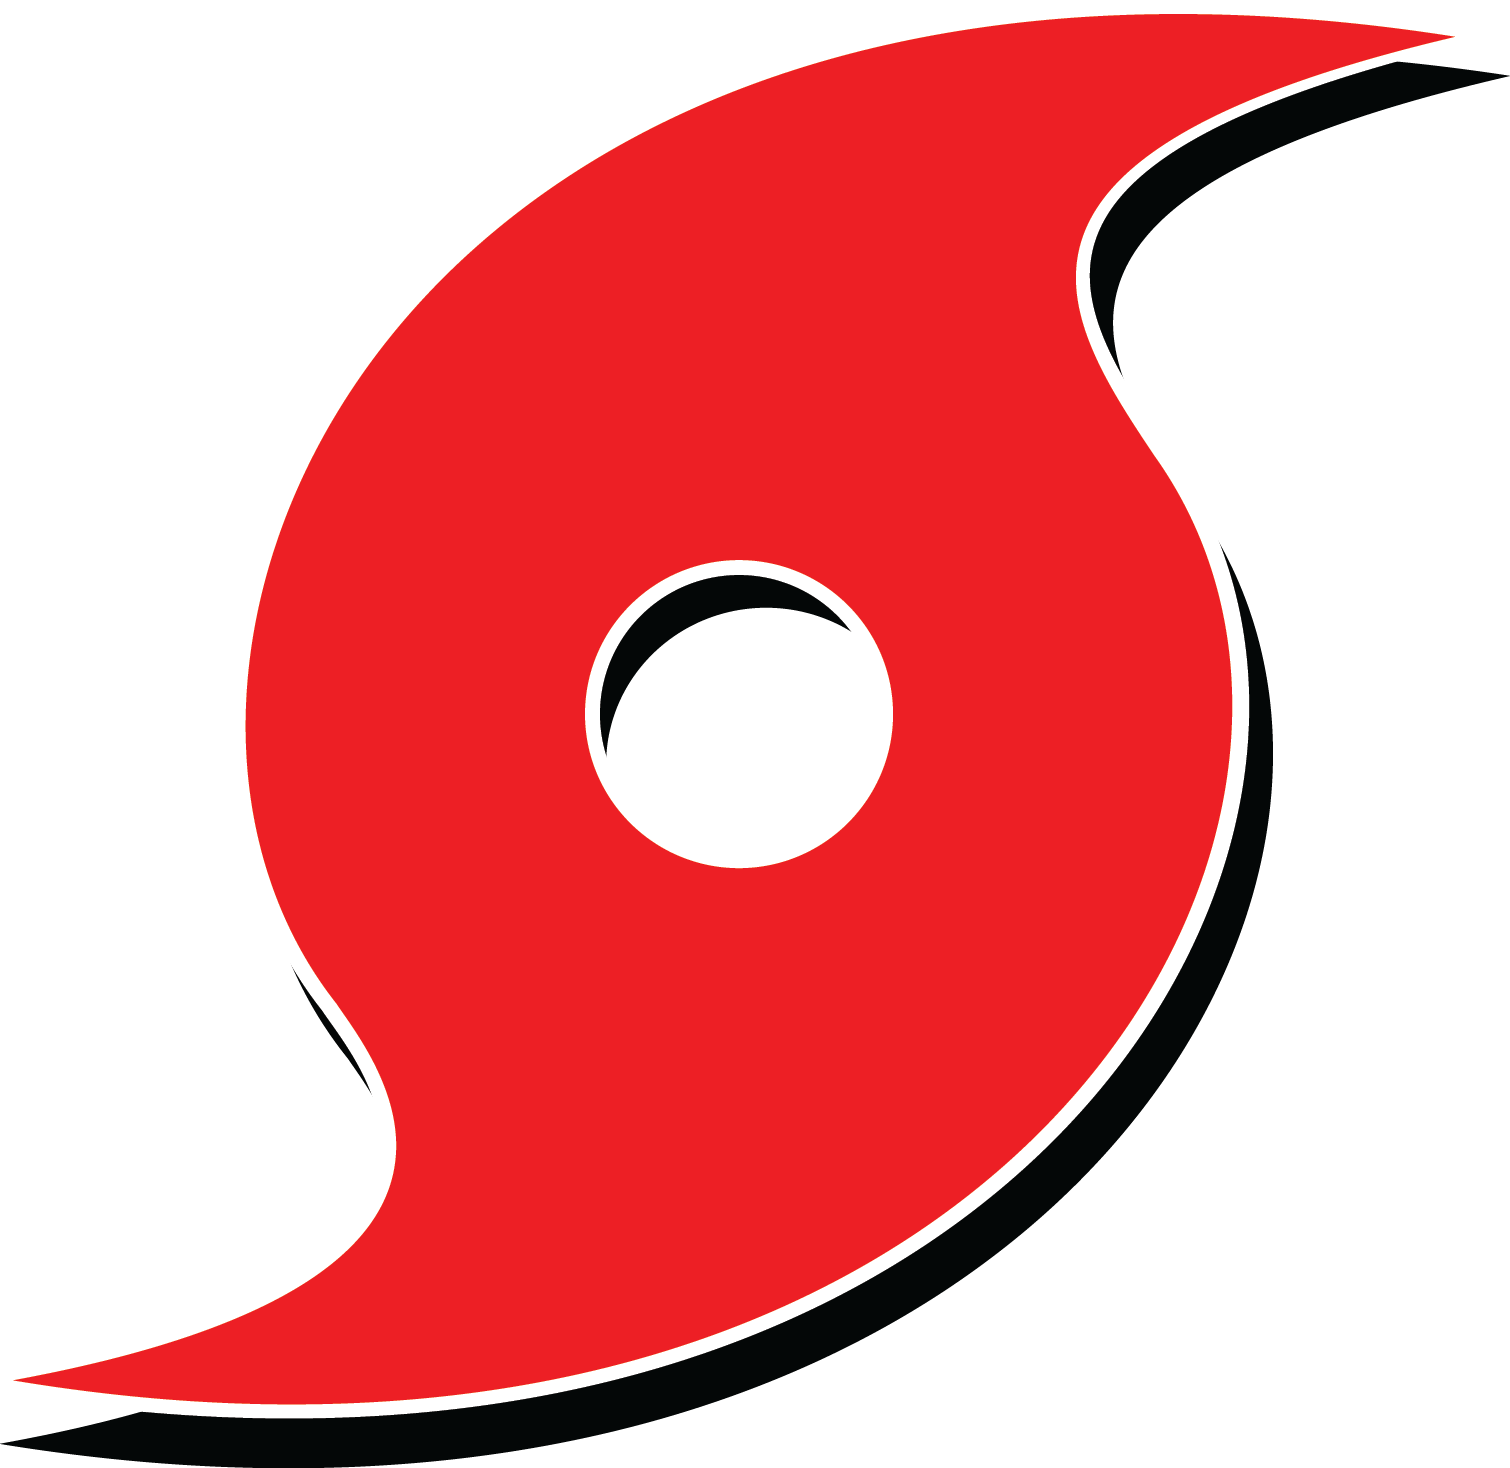 Hurricane Symbol Png Hurricane Tornado Clipart Images Free Download Free Transparent Png Logos